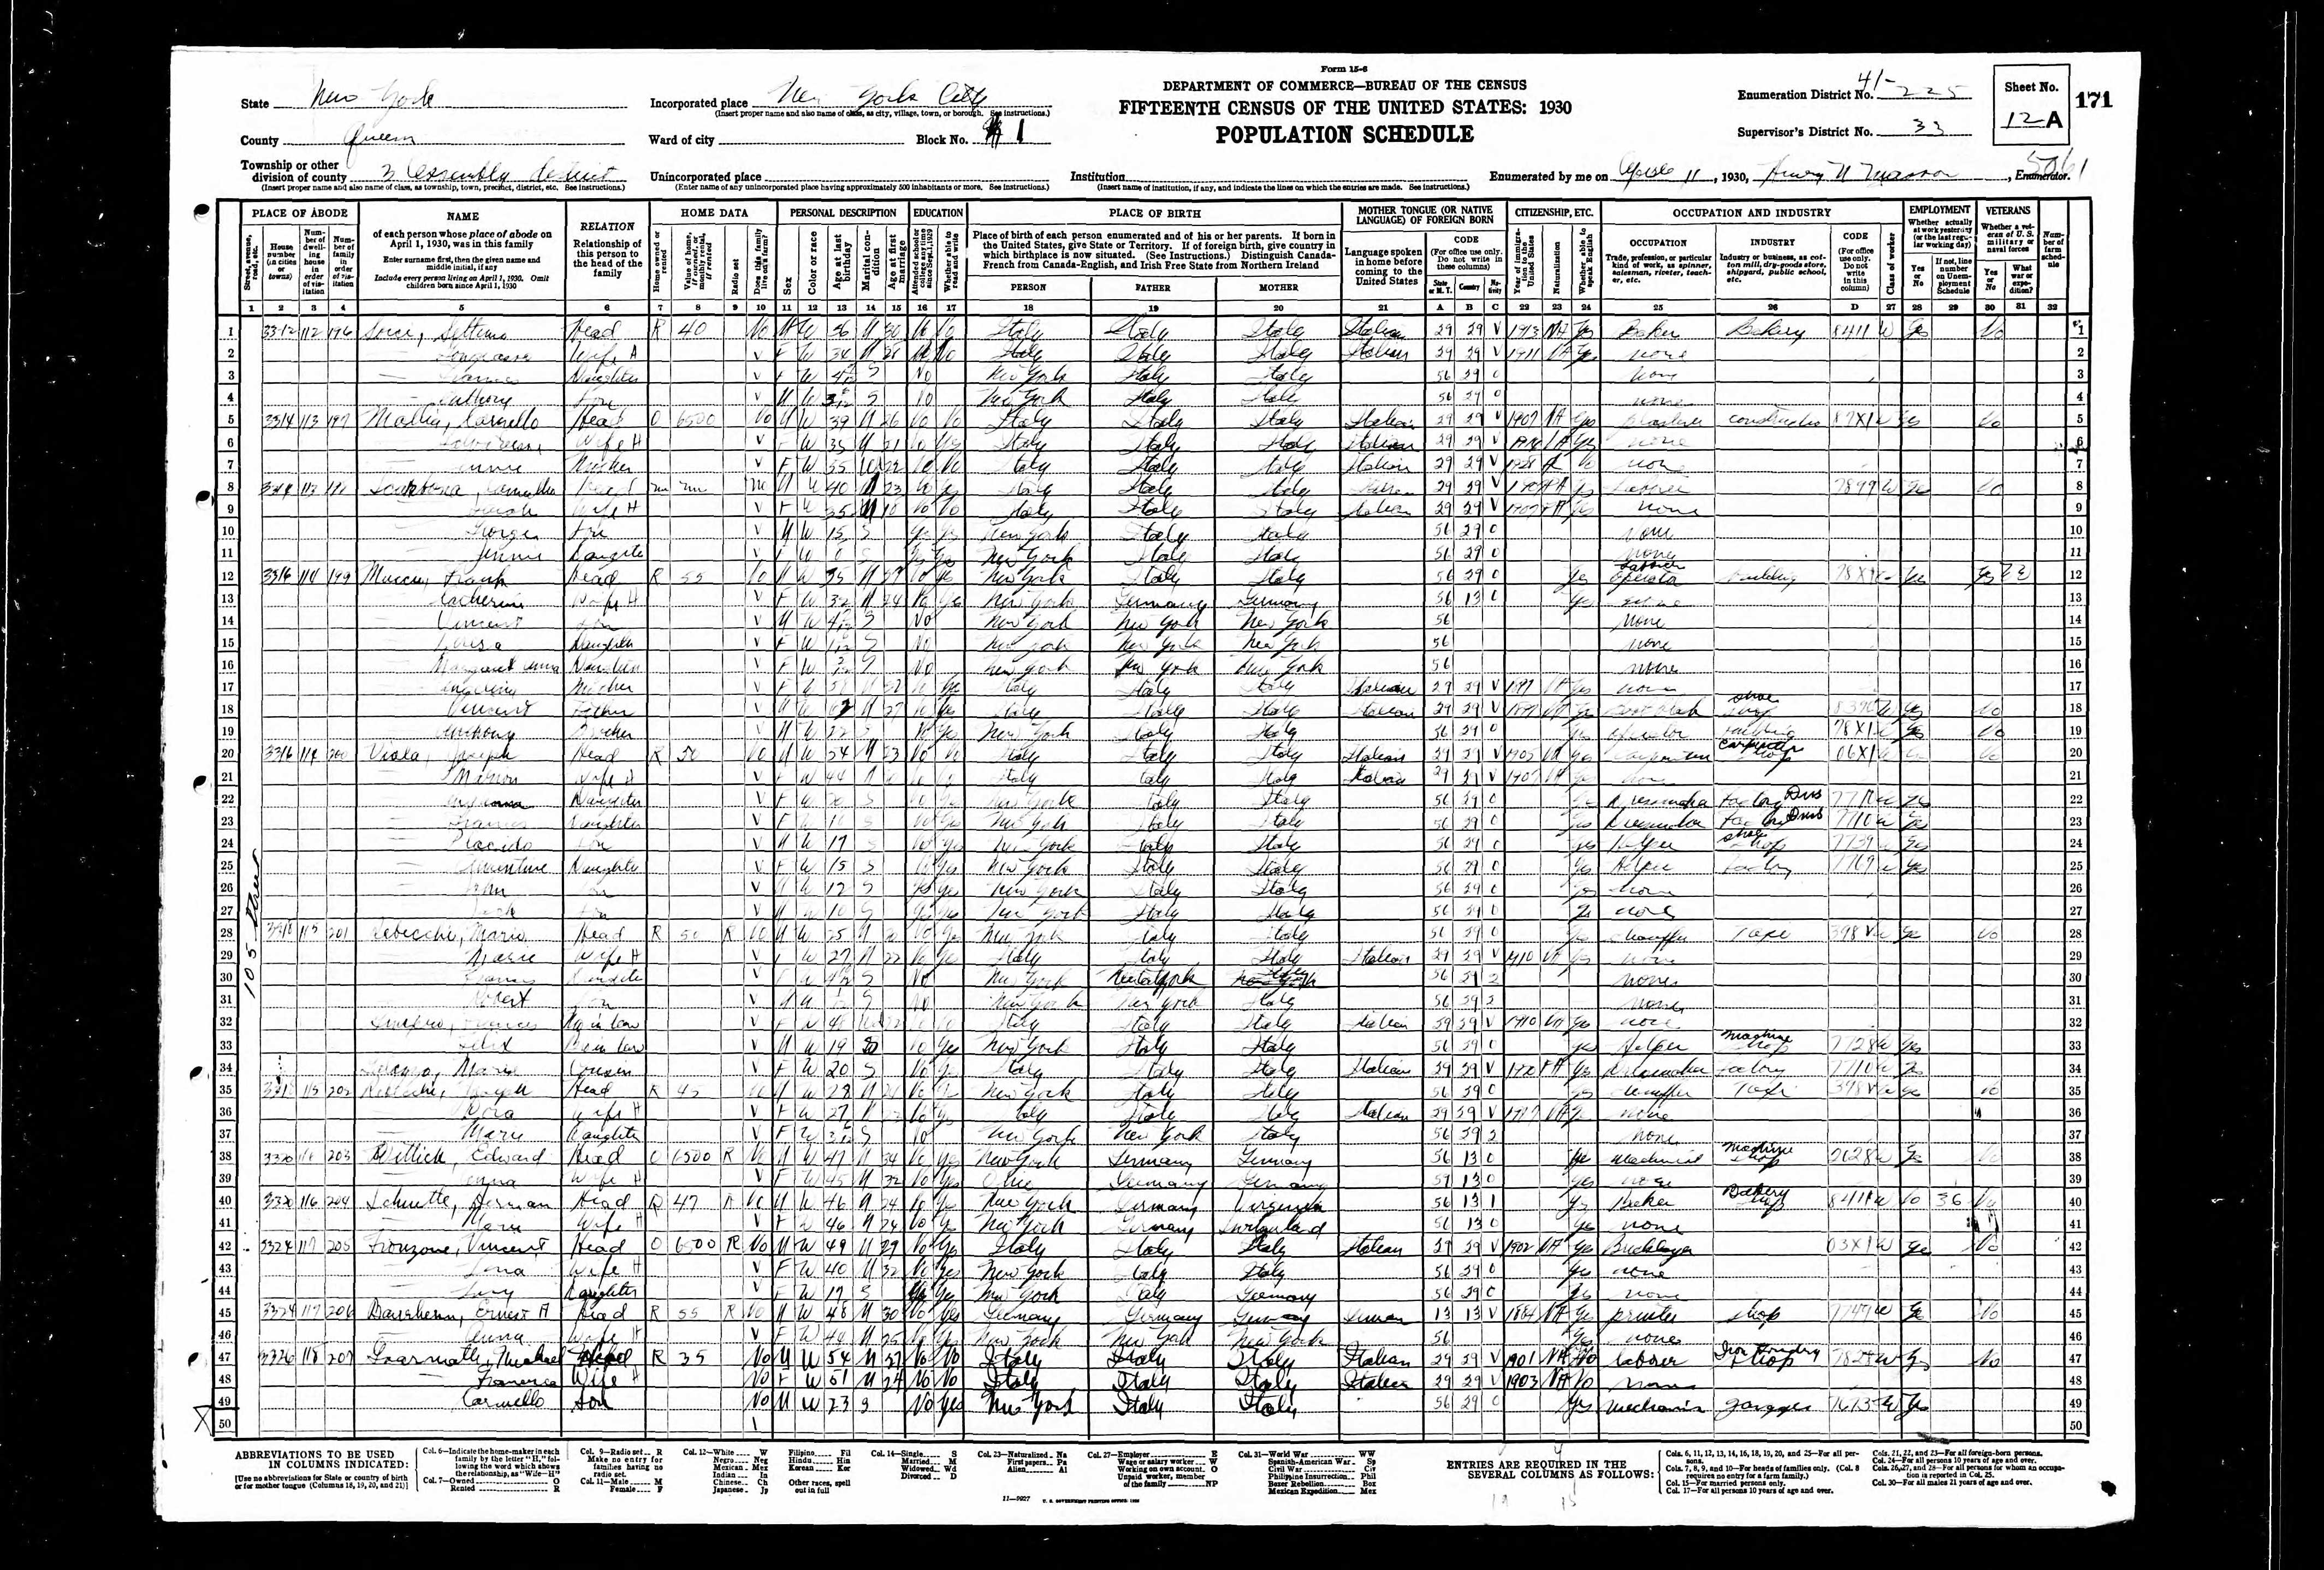 1930 US Census, Settimo Sorci, lines 1-4